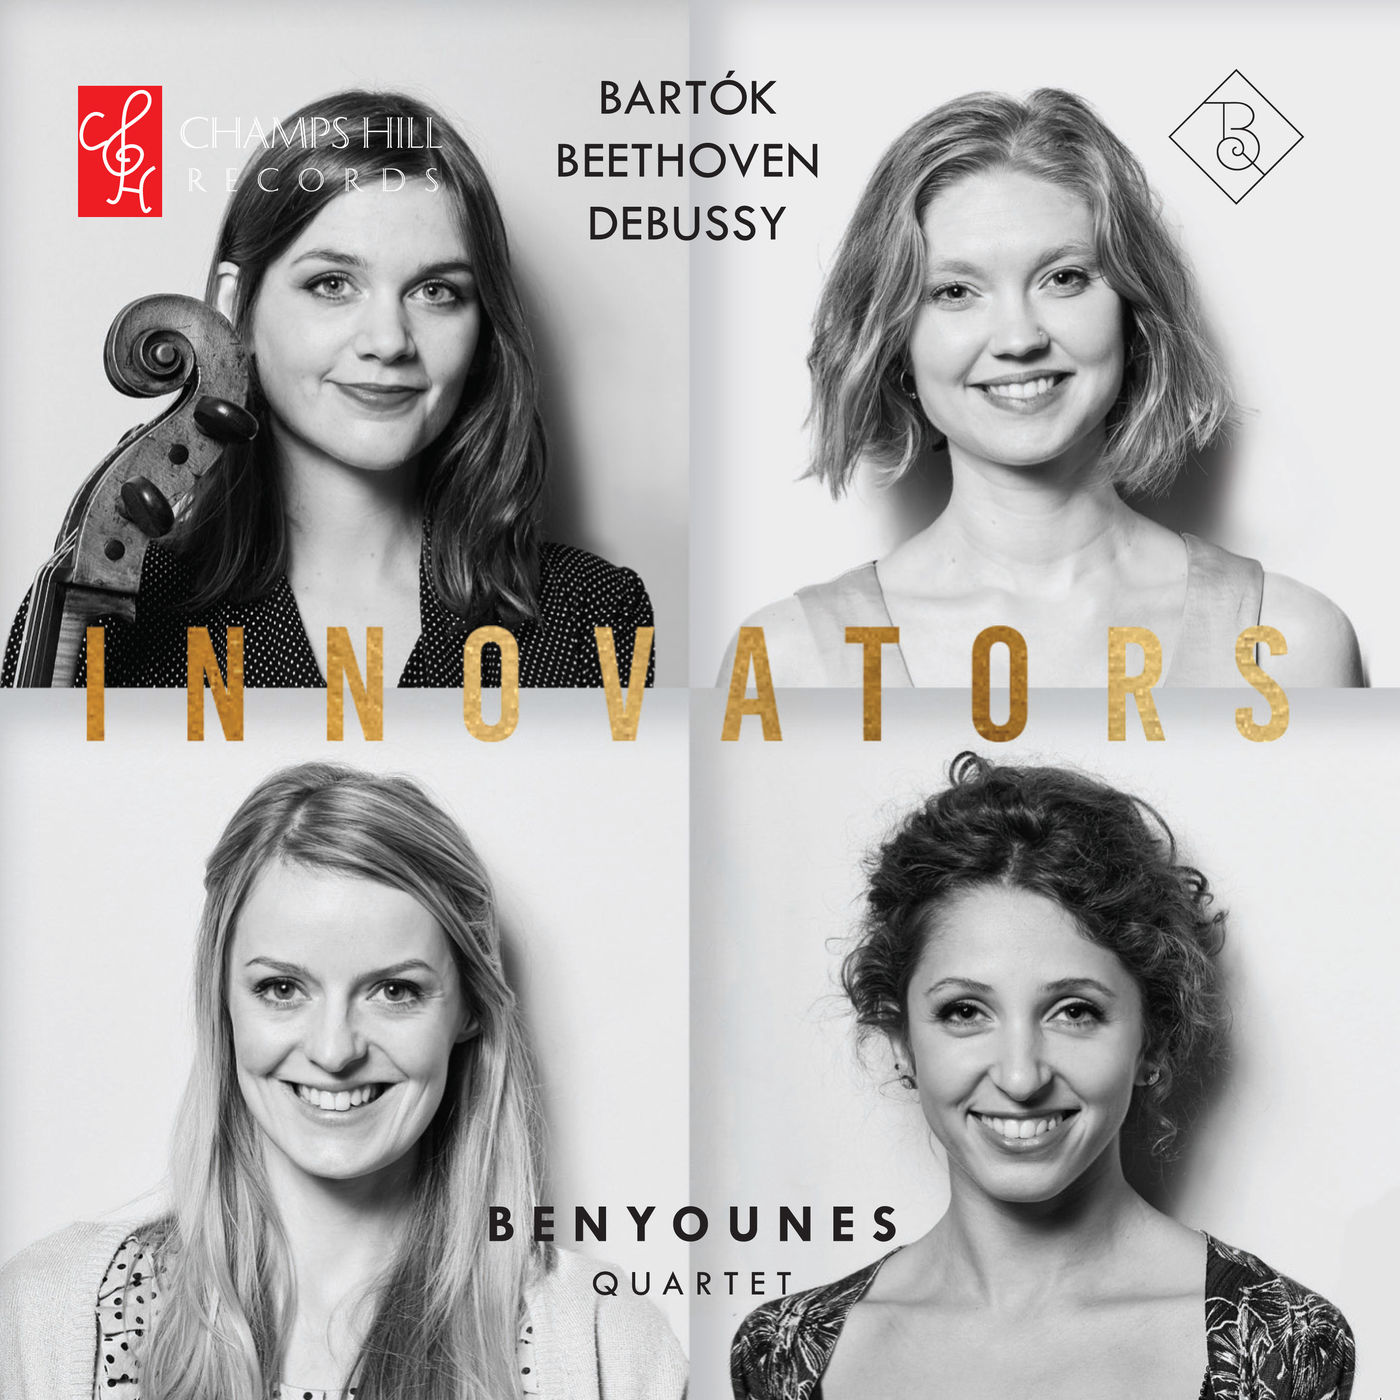 Benyounes Quartet – Bartok, Beethoven, Debussy: Innovators (2019) [FLAC 24bit/192kHz]